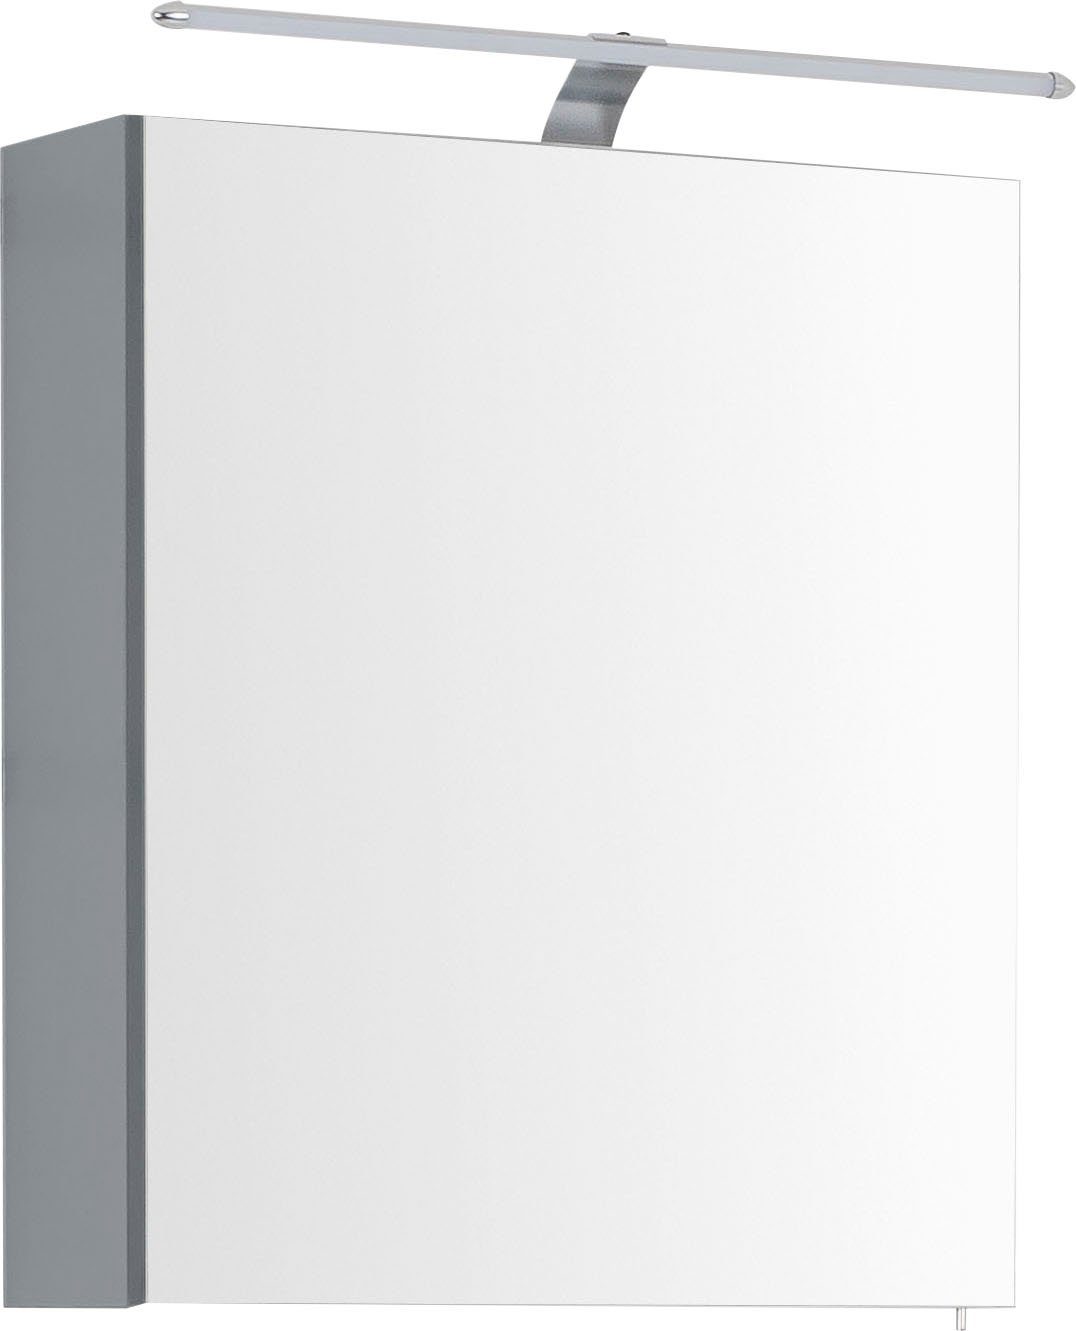 OPTIFIT Spiegelschrank Bern basalt | basalt | Spiegelschränke